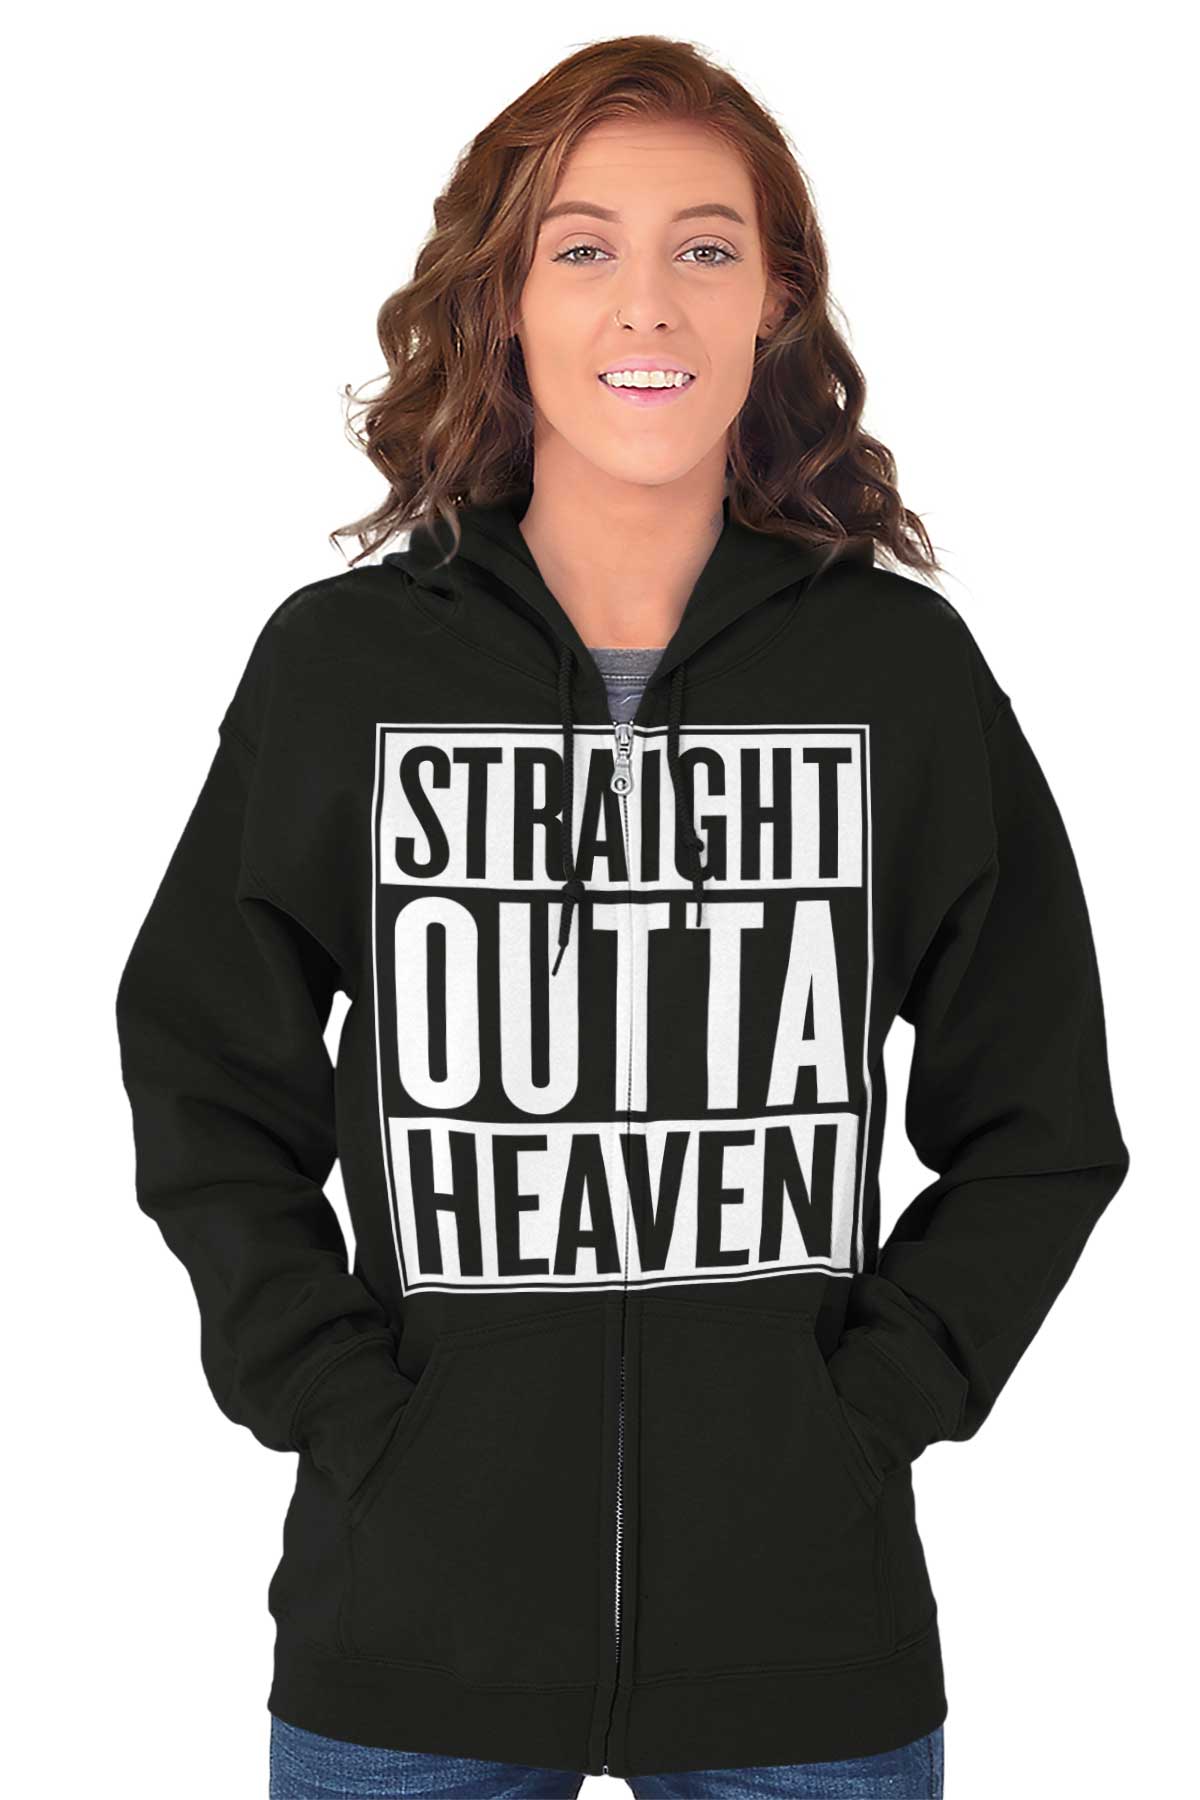 Straight Outta Heaven Christian Faith Rapper Adult Zip Hoodie Jacket 